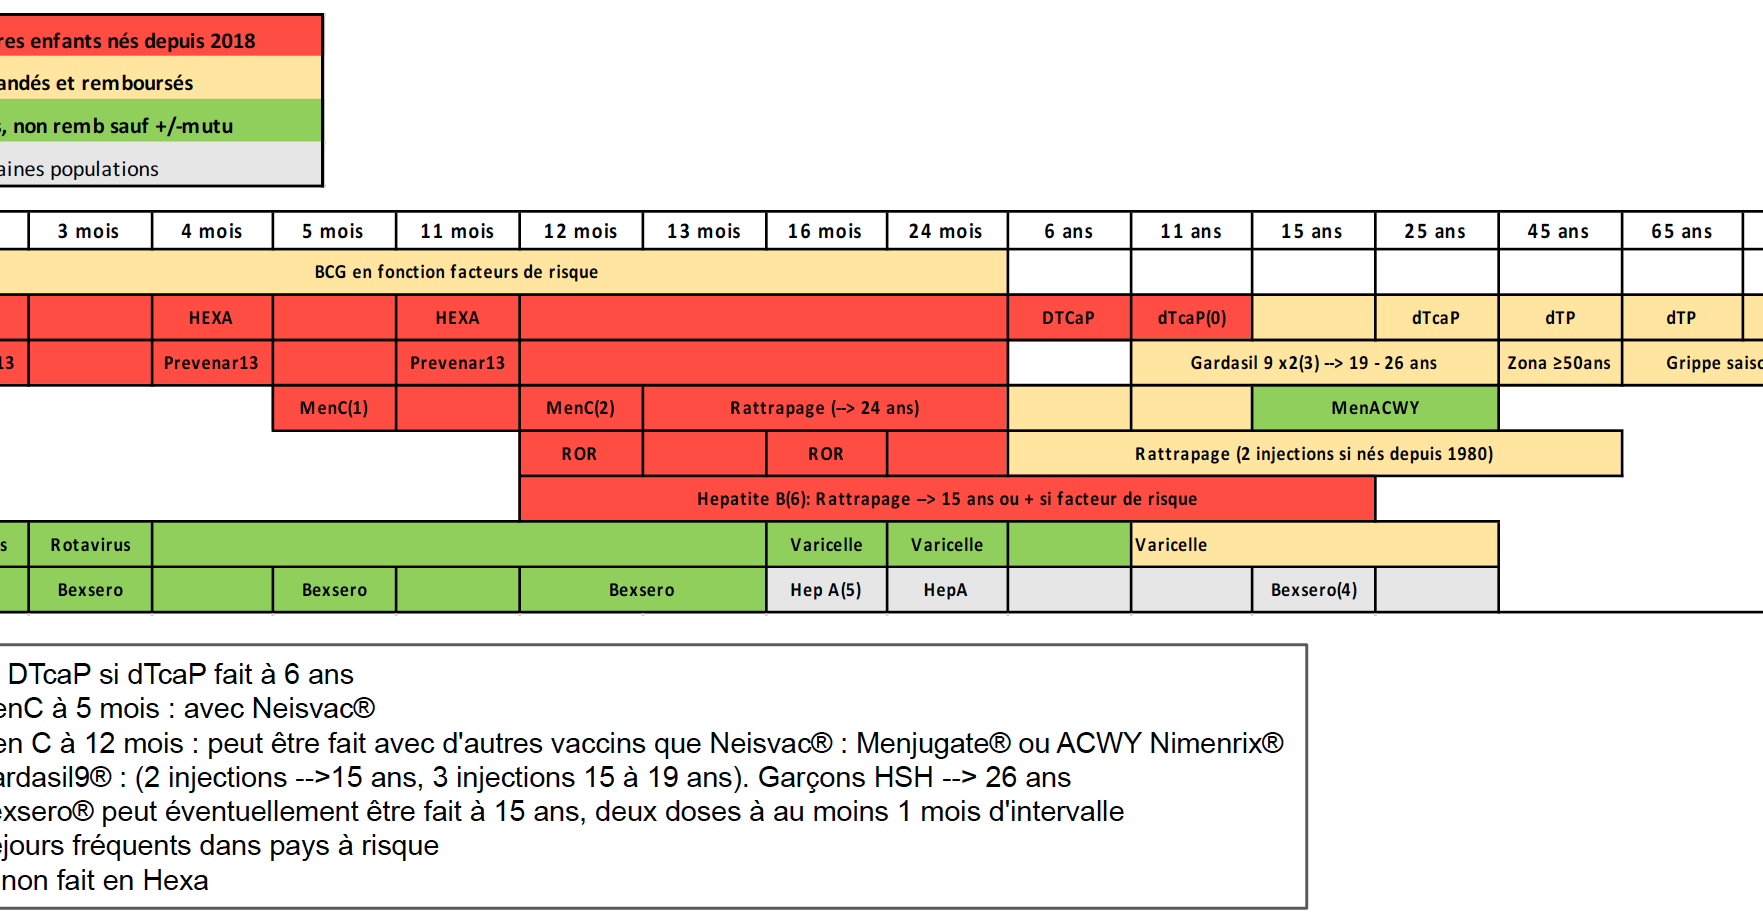 Calendrier Vaccinal InfoVac - Novembre 2020 | Infovac France